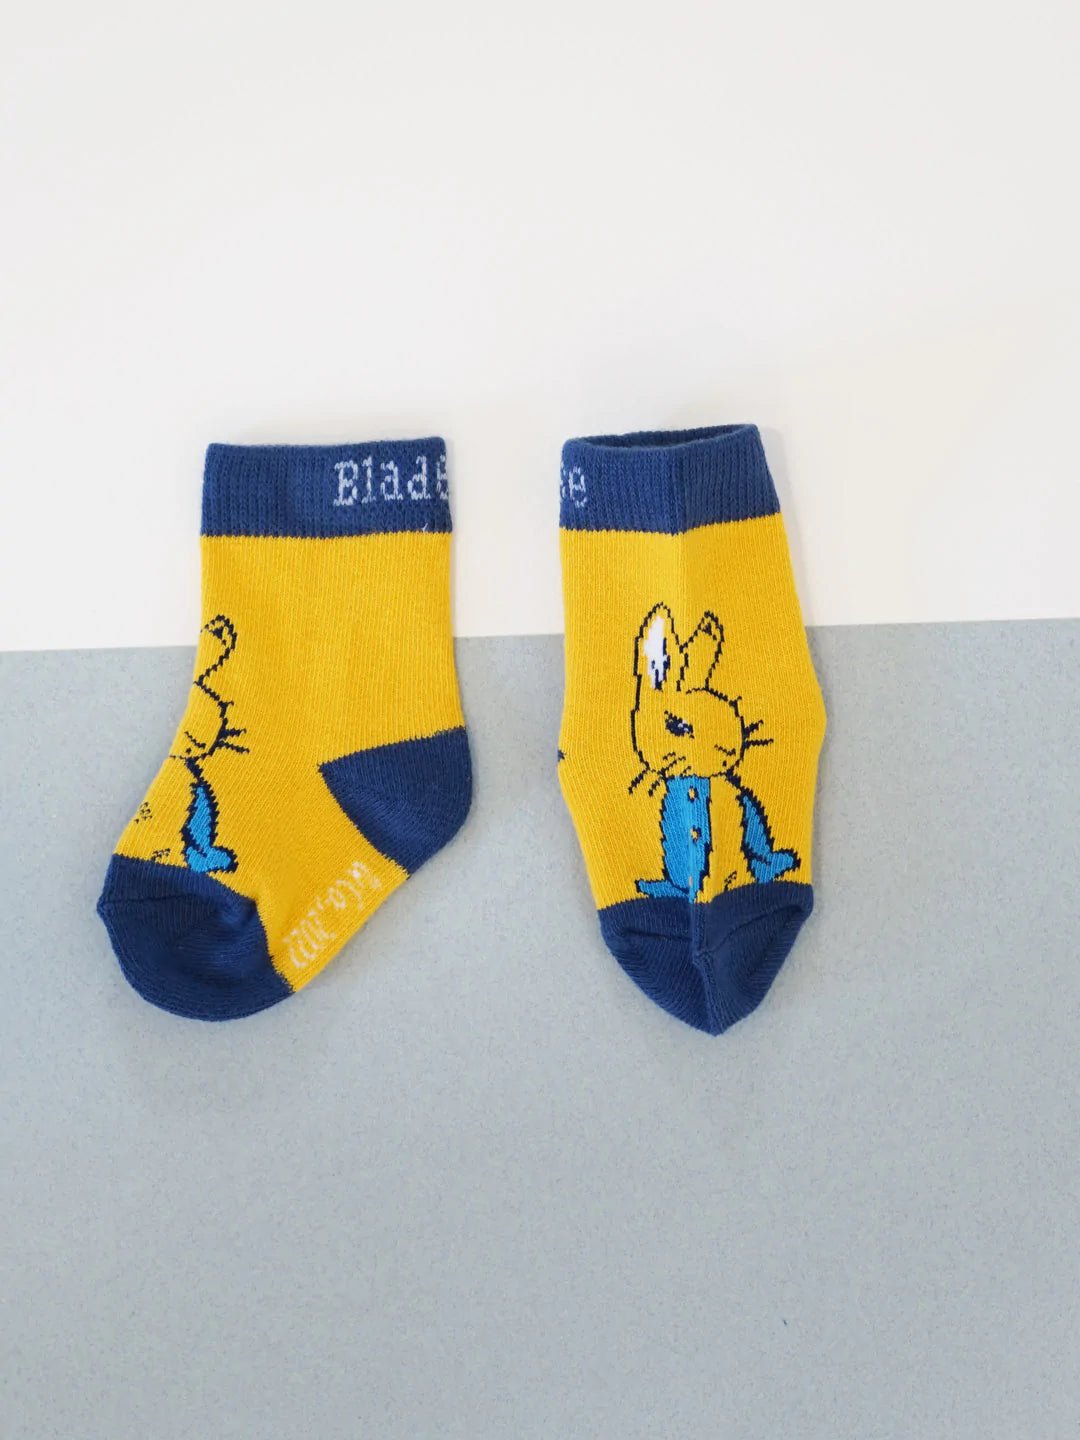 Peter Rabbit Modern Mix Socks by Blade & Rose